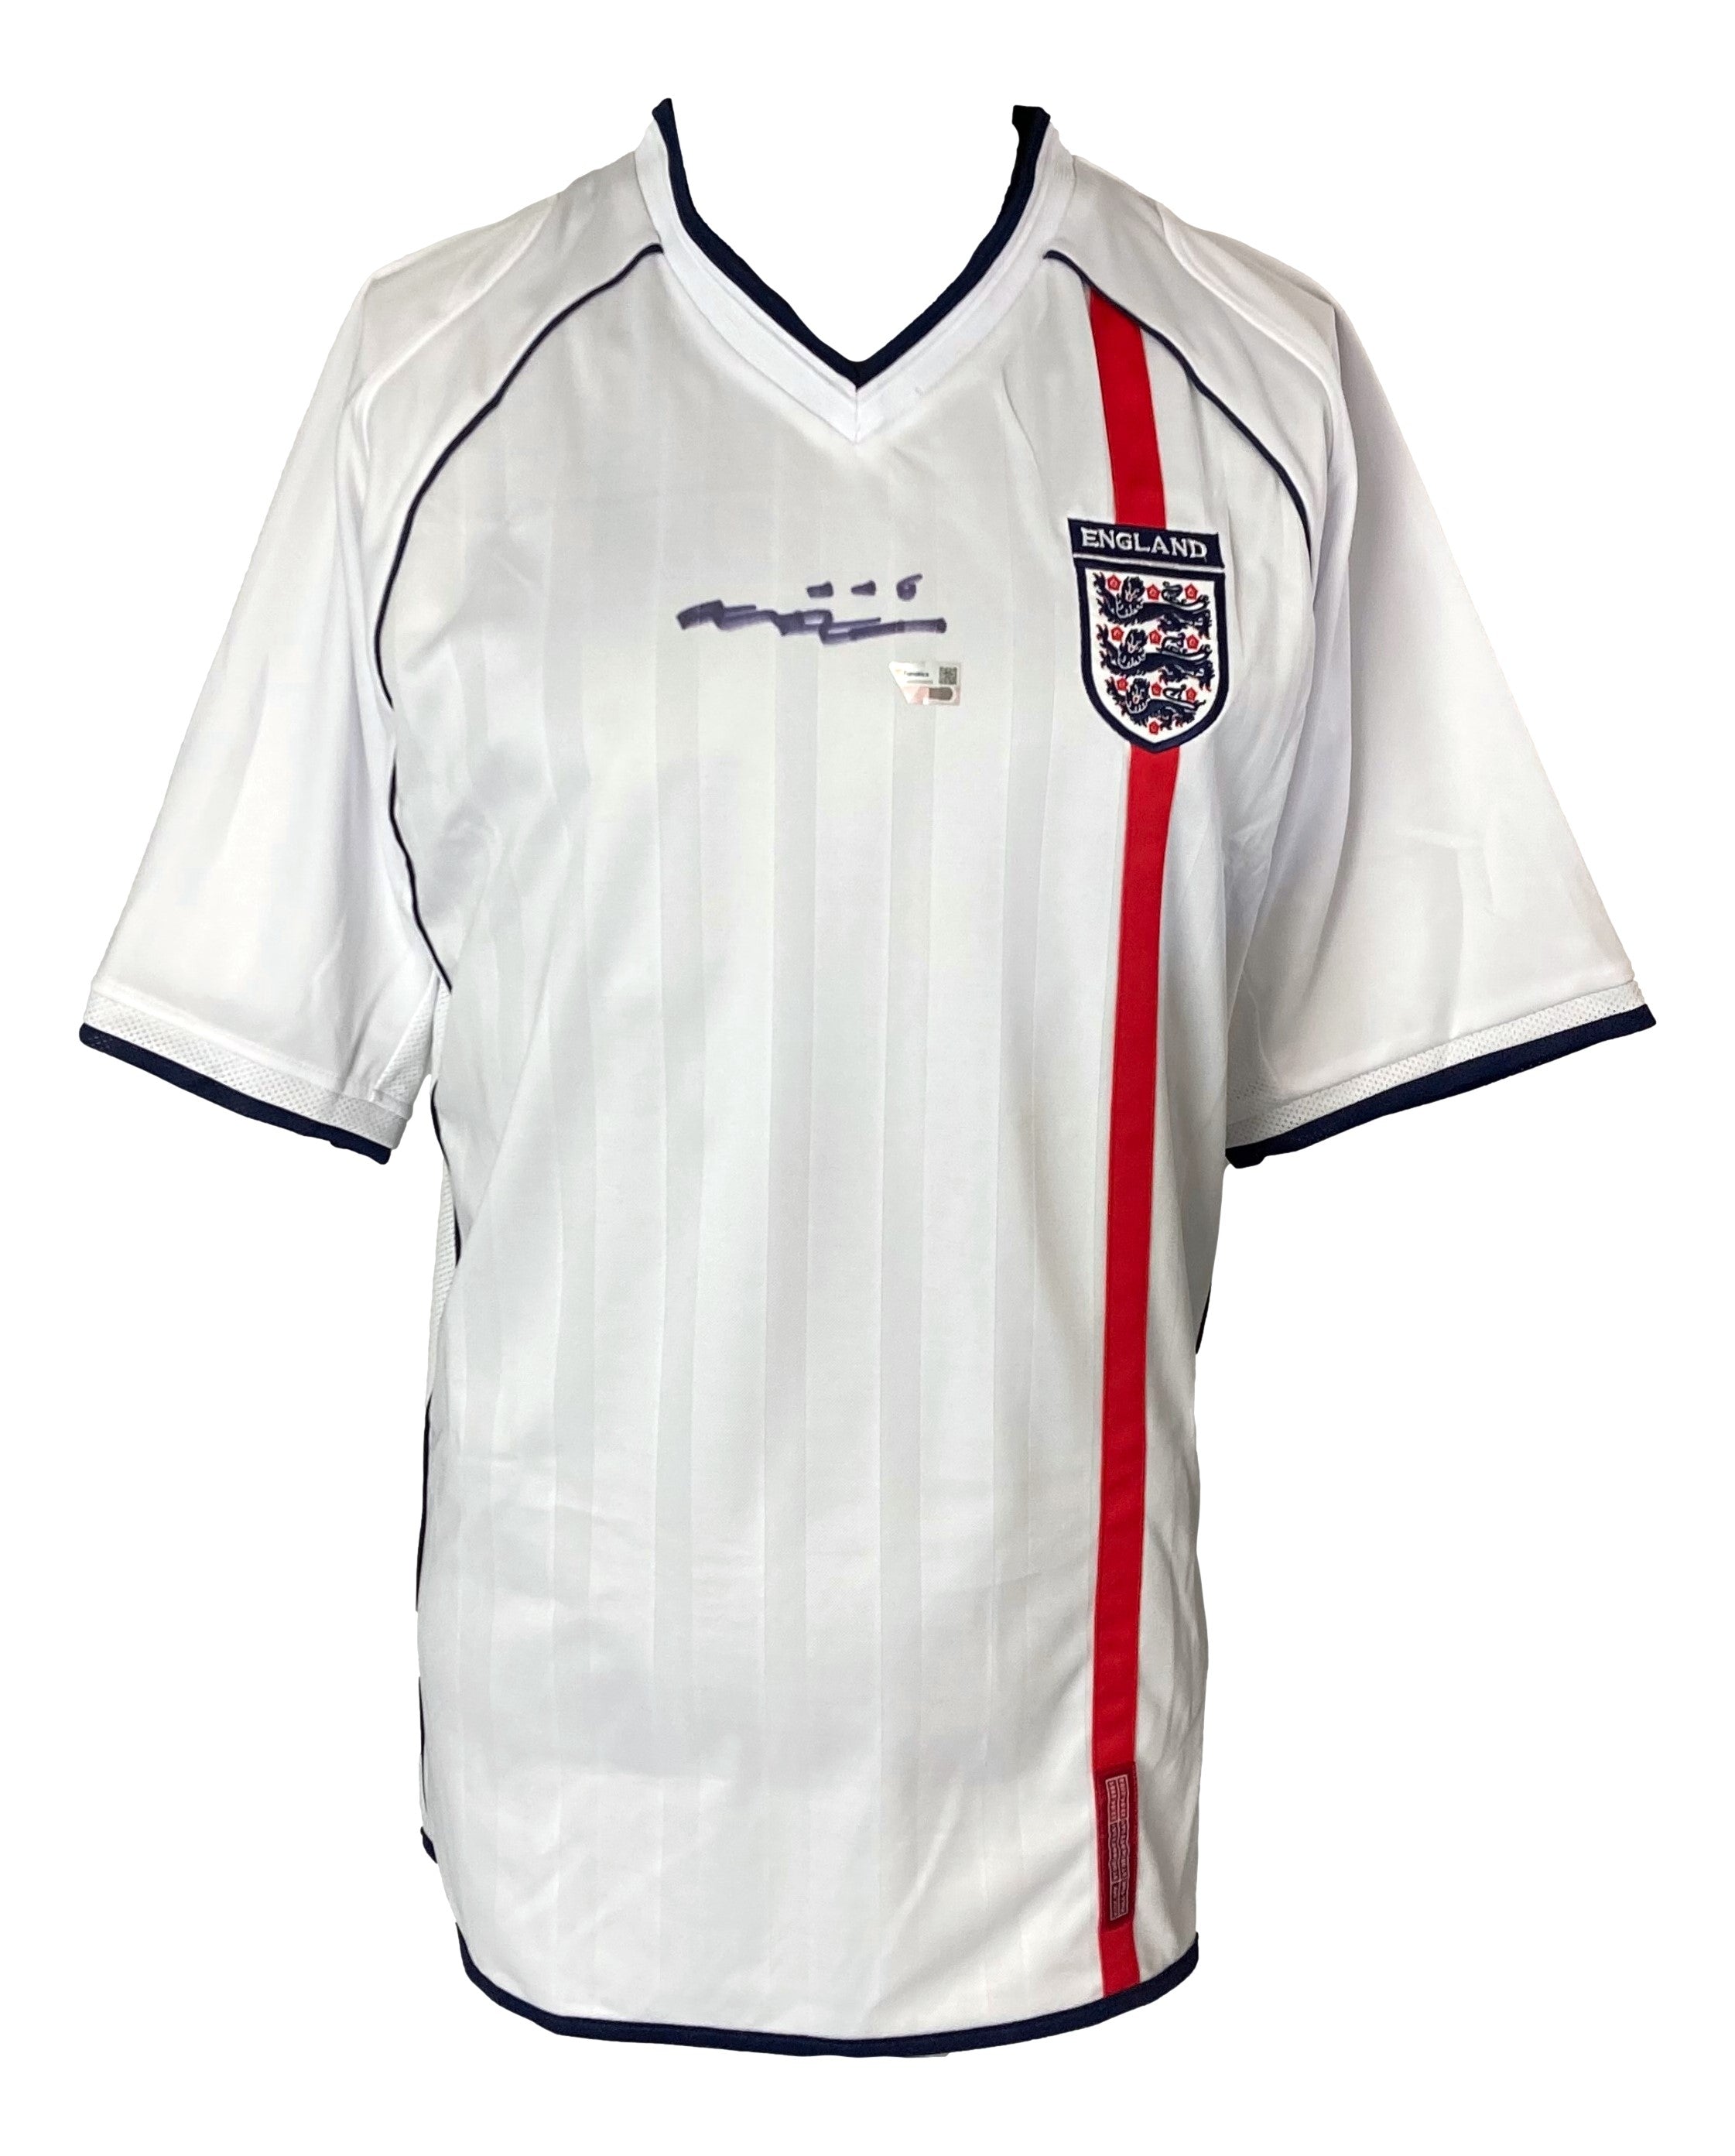 John Terry's iconic England kit